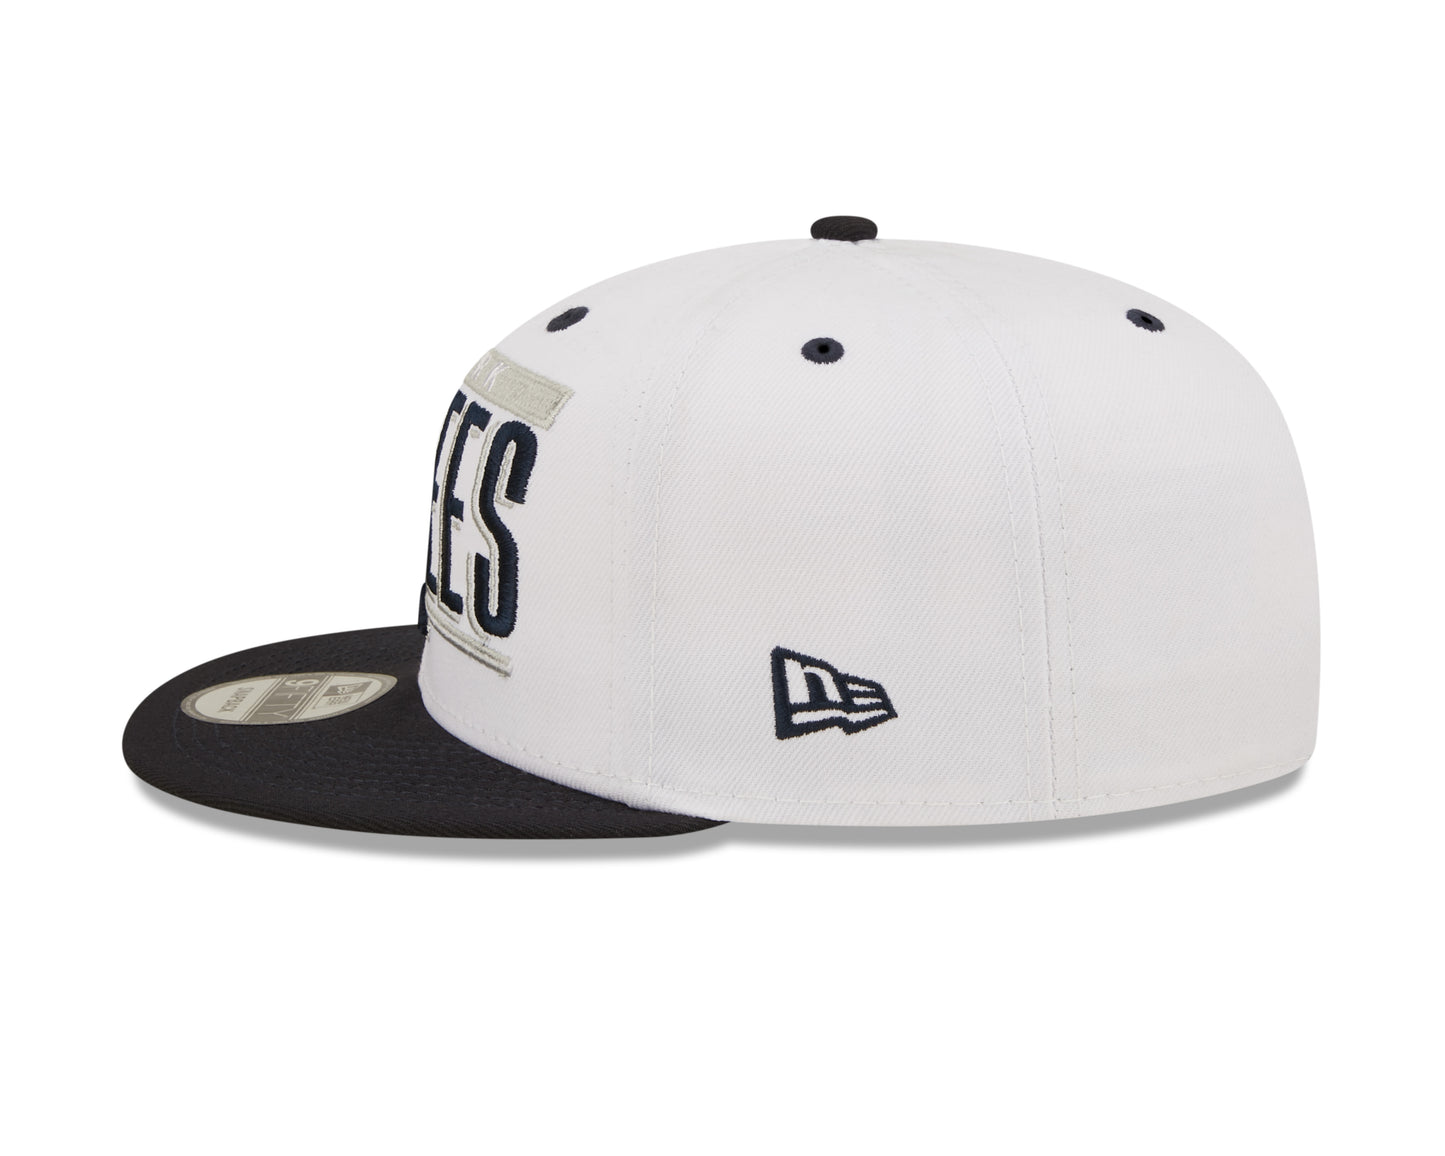 New York Yankees New Era Retro Title 9FIFTY Snapback Hat - White/Navy